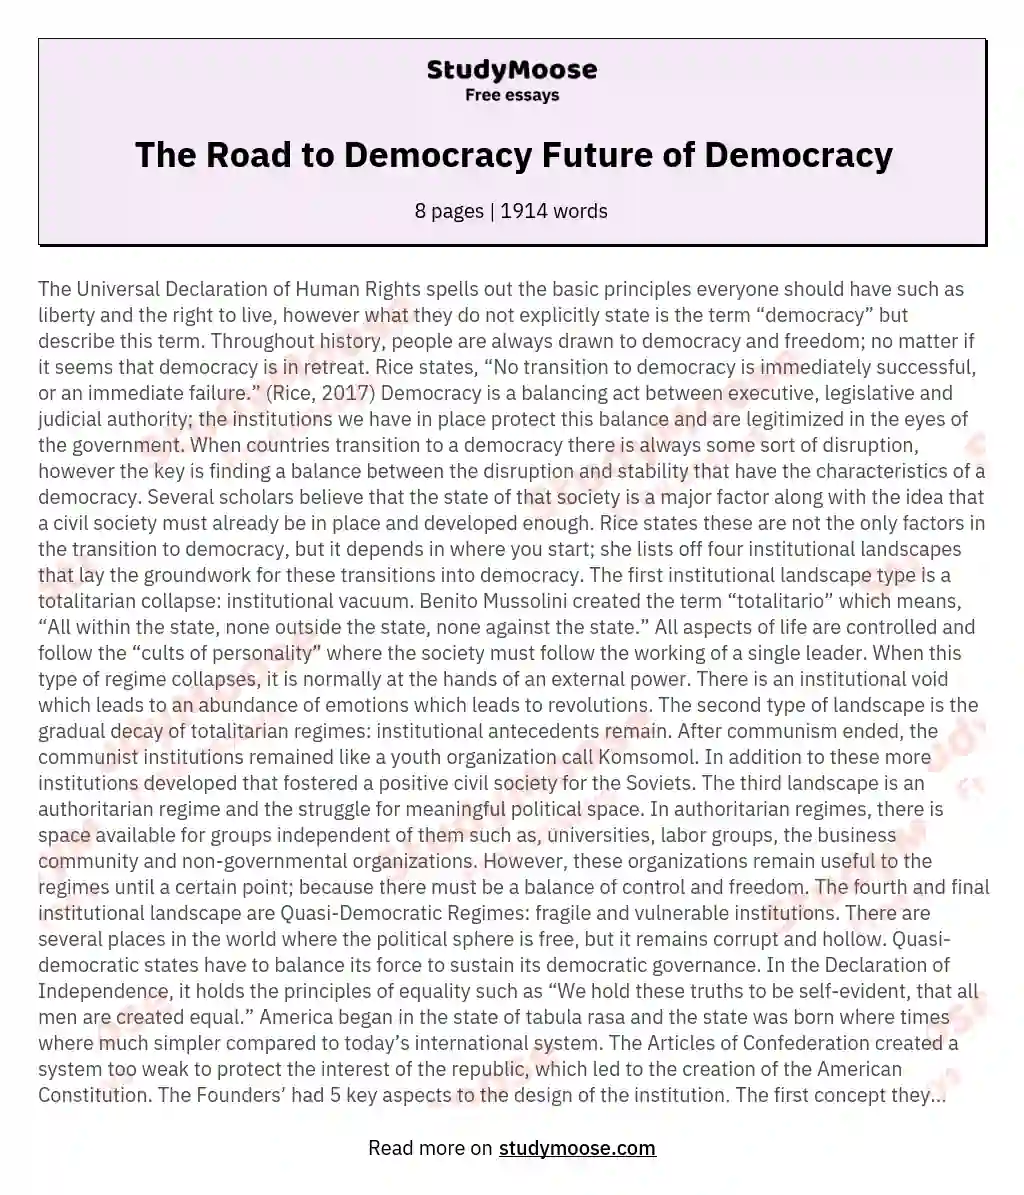 The Road to Democracy Future of Democracy essay